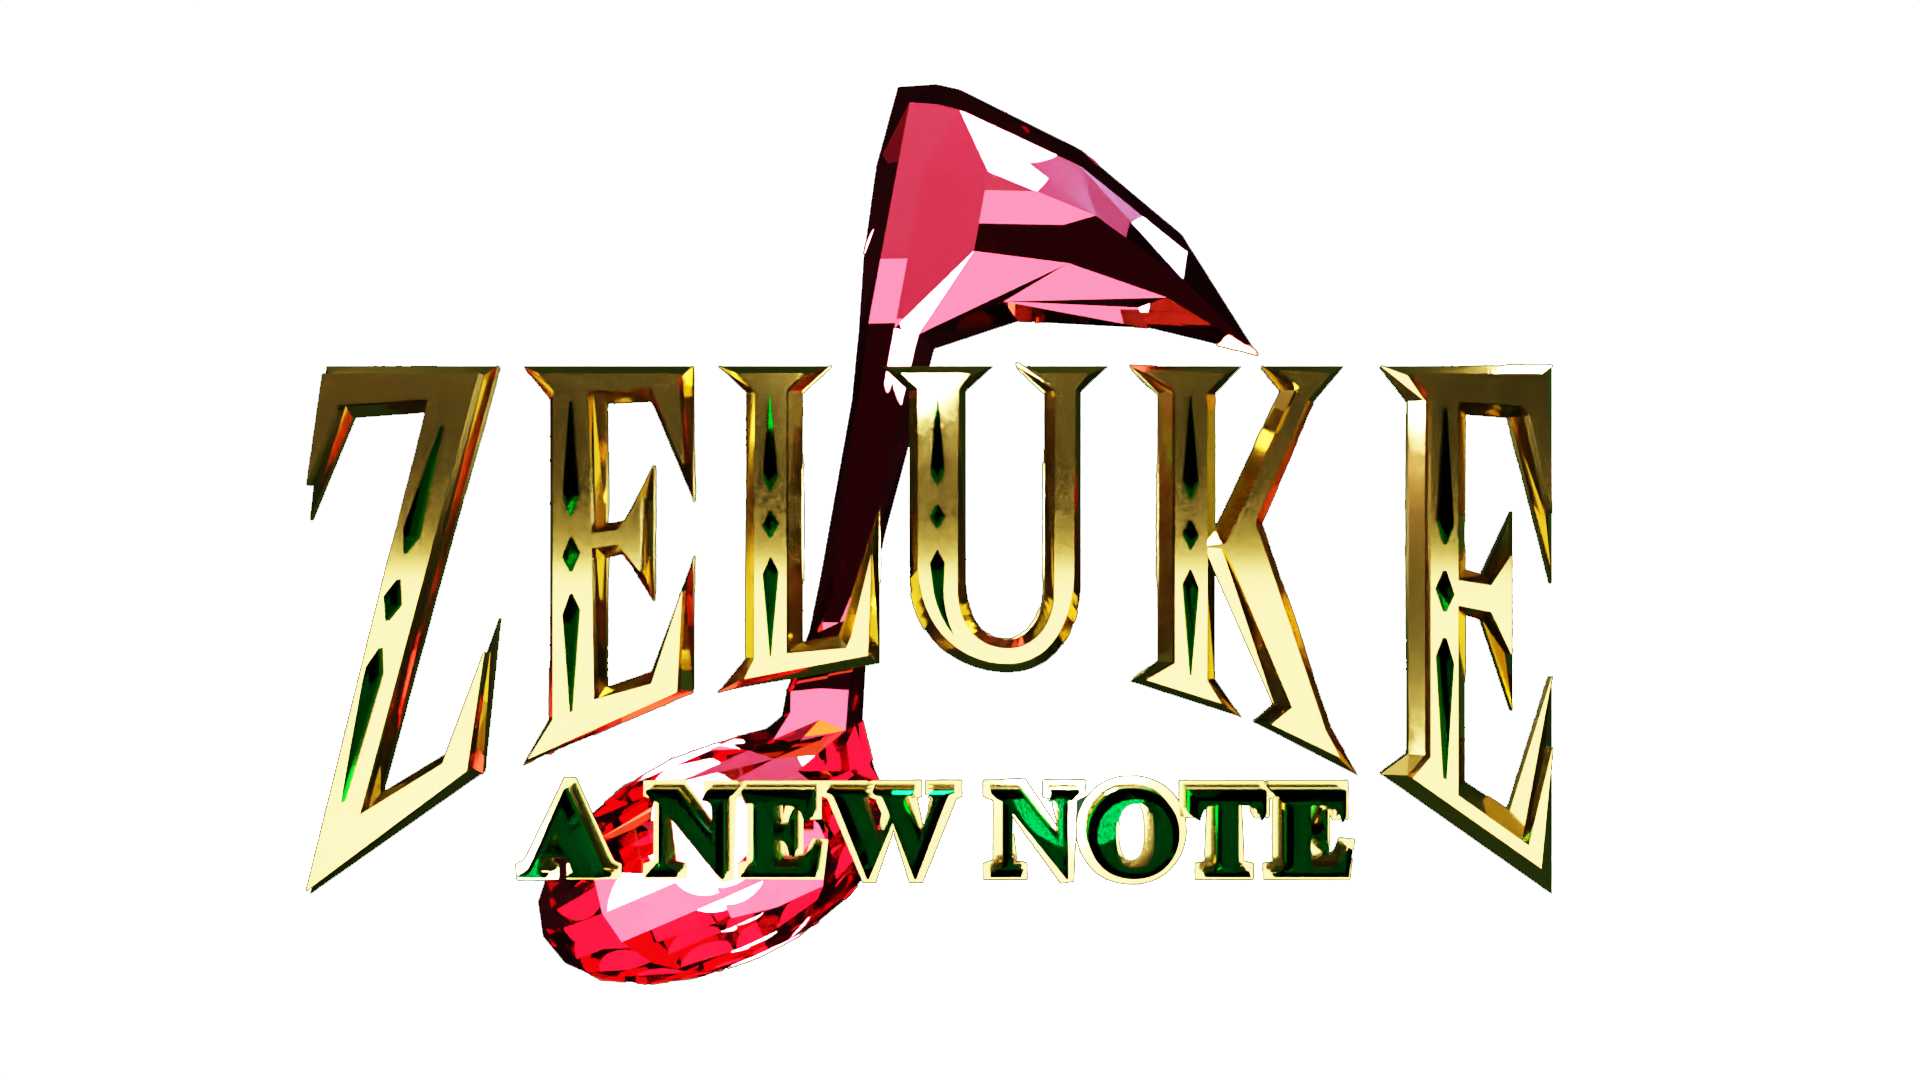 Zeluke A New Note